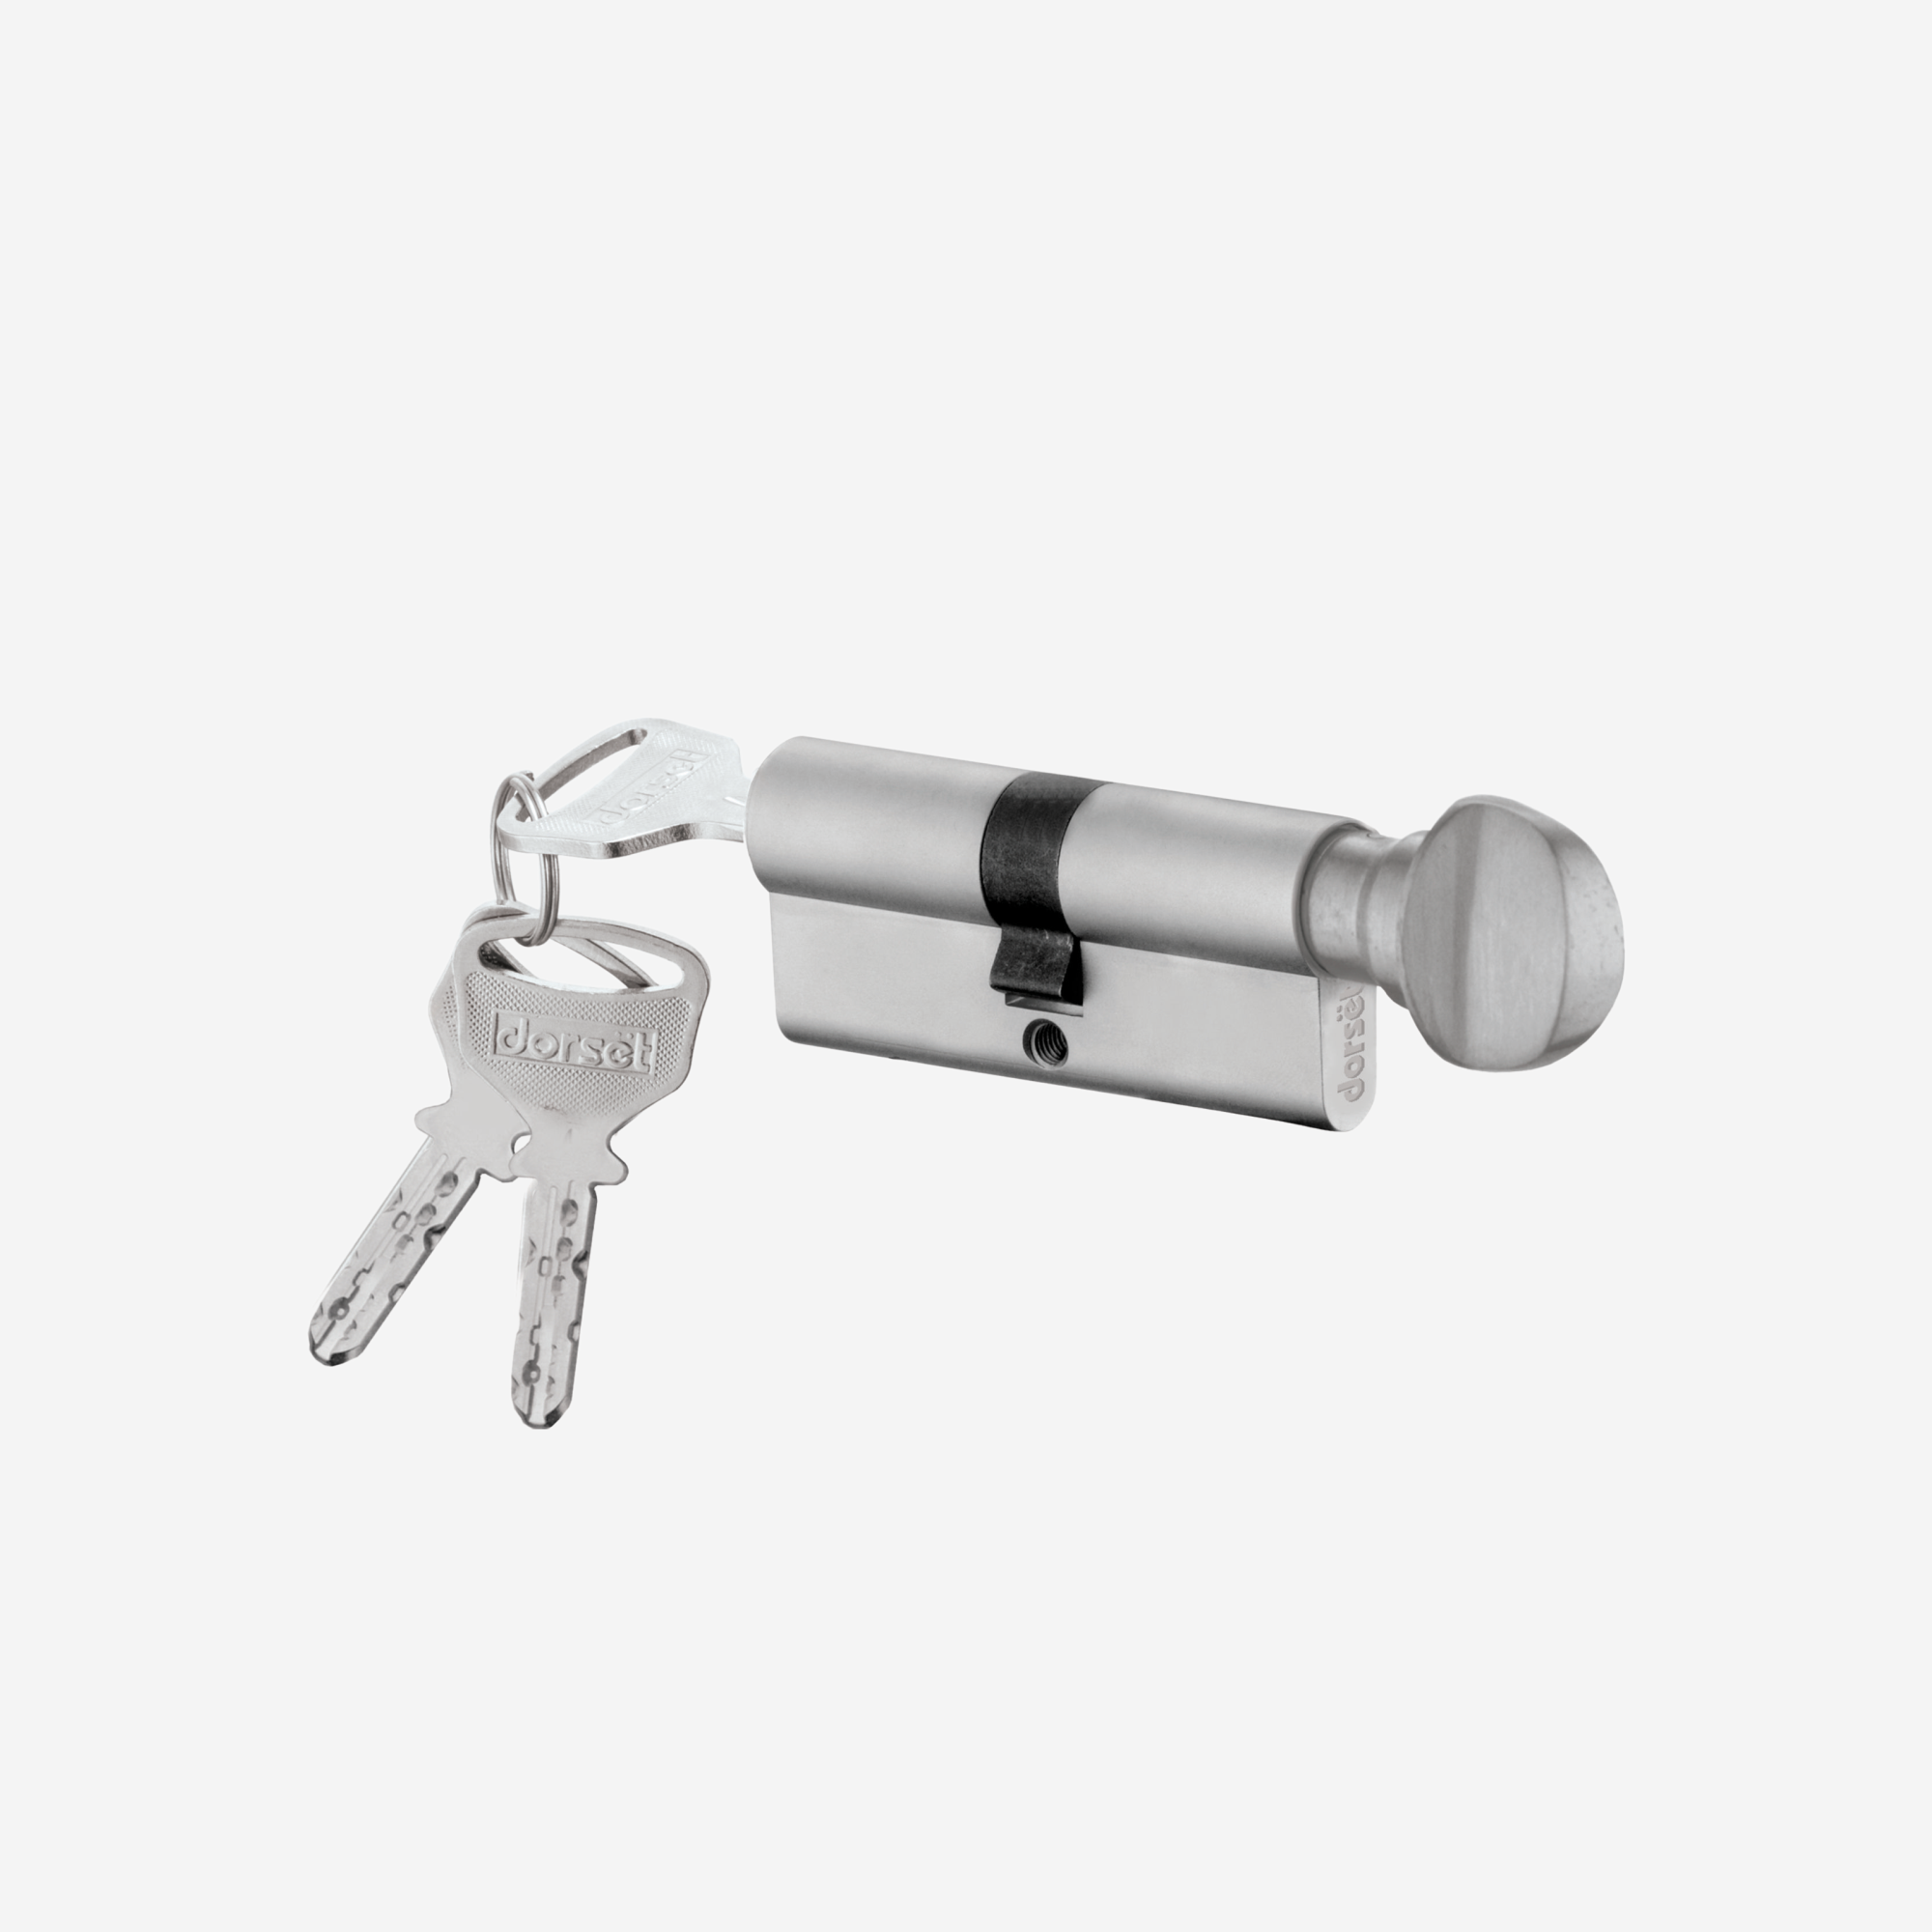 Defender Locking Technology - Key and Knob